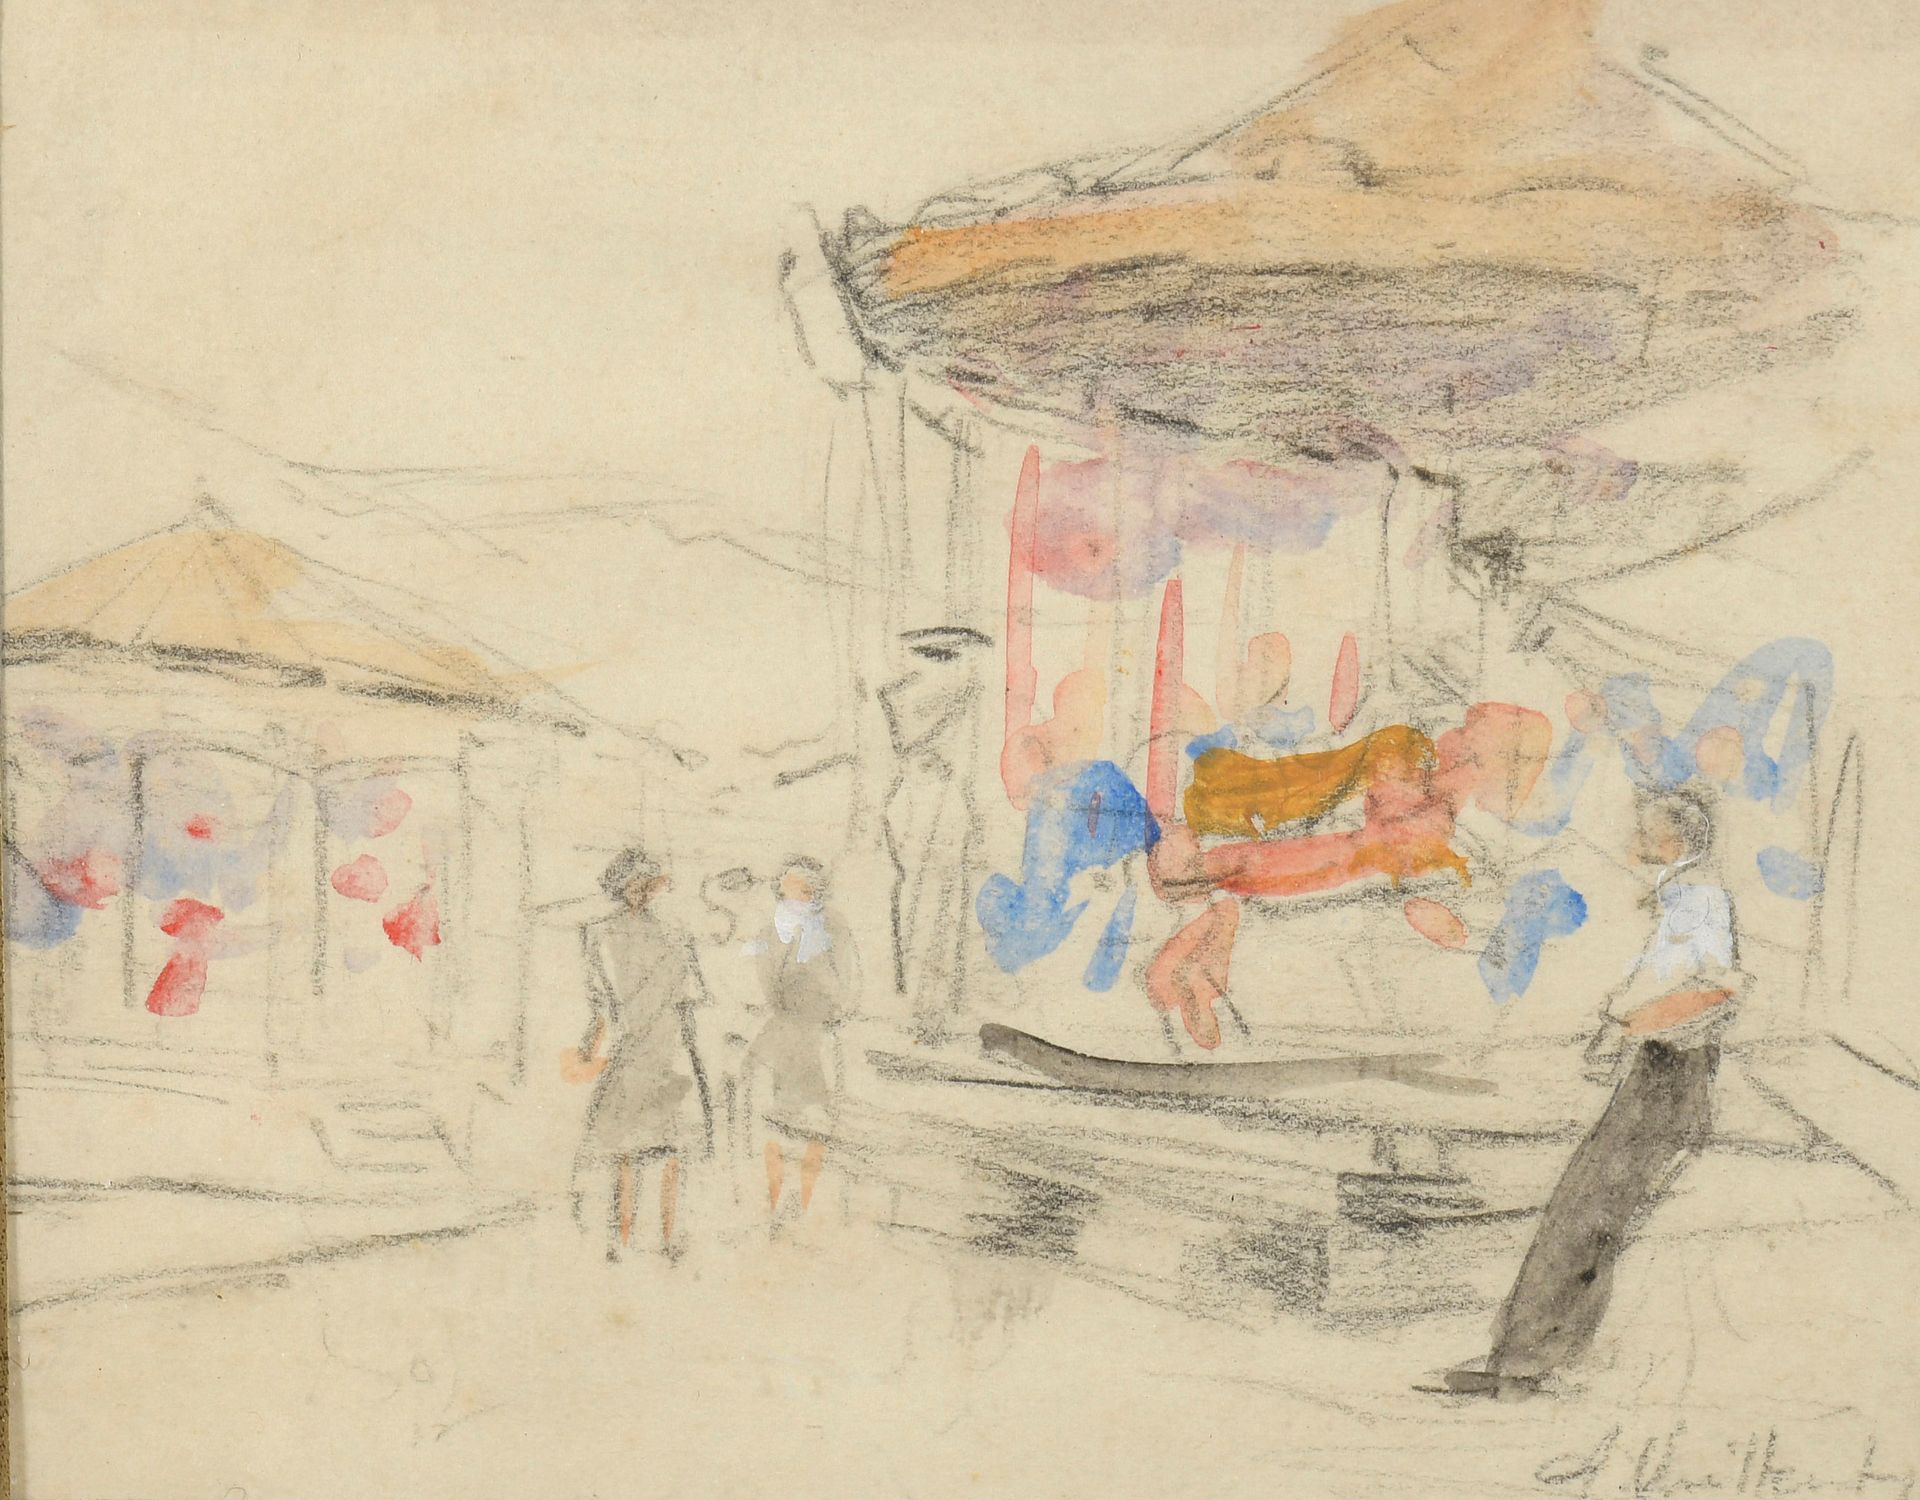 Null Auguste VUILLEMOT (1883-1970)

The carousel and the Café du center

Two wat&hellip;